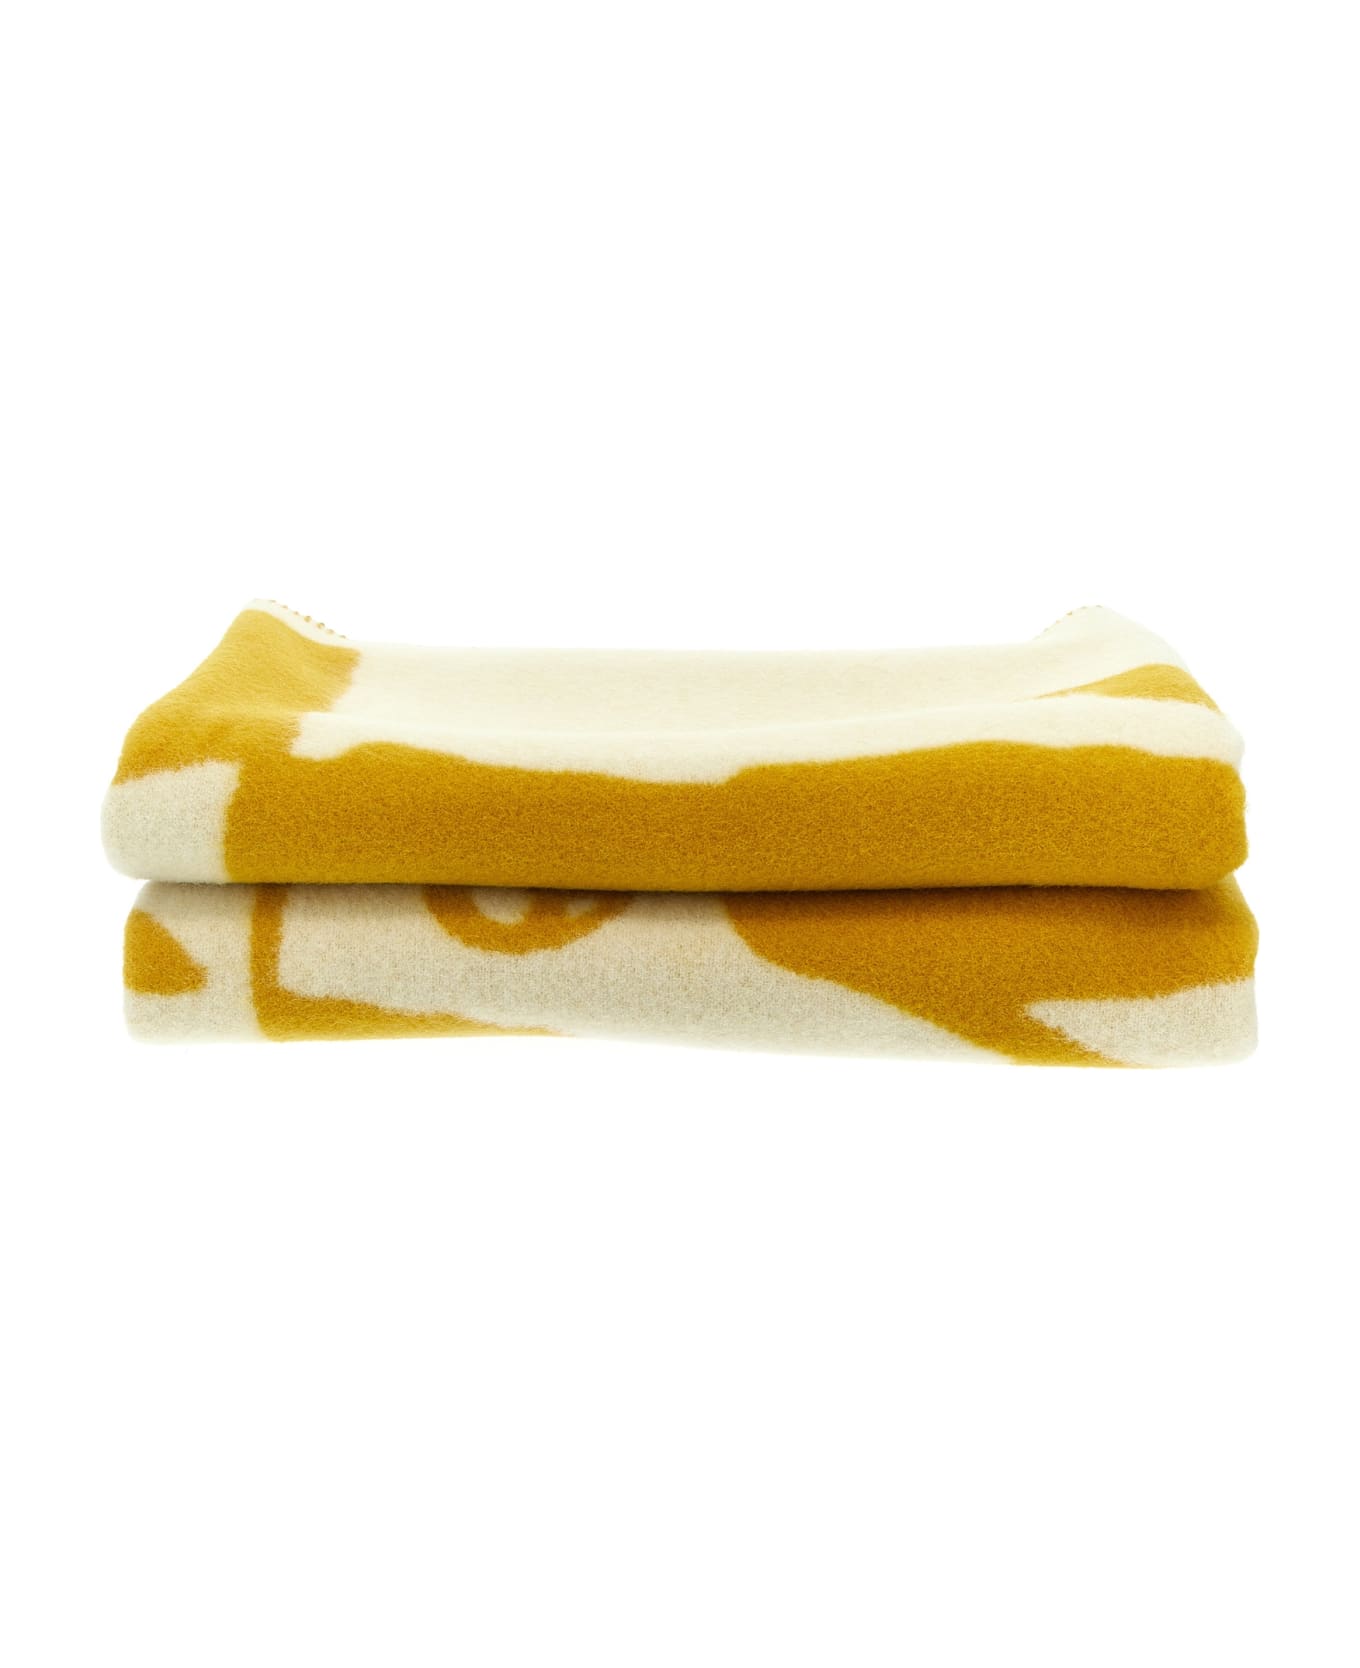 Burberry Logo Blanket - Yellow